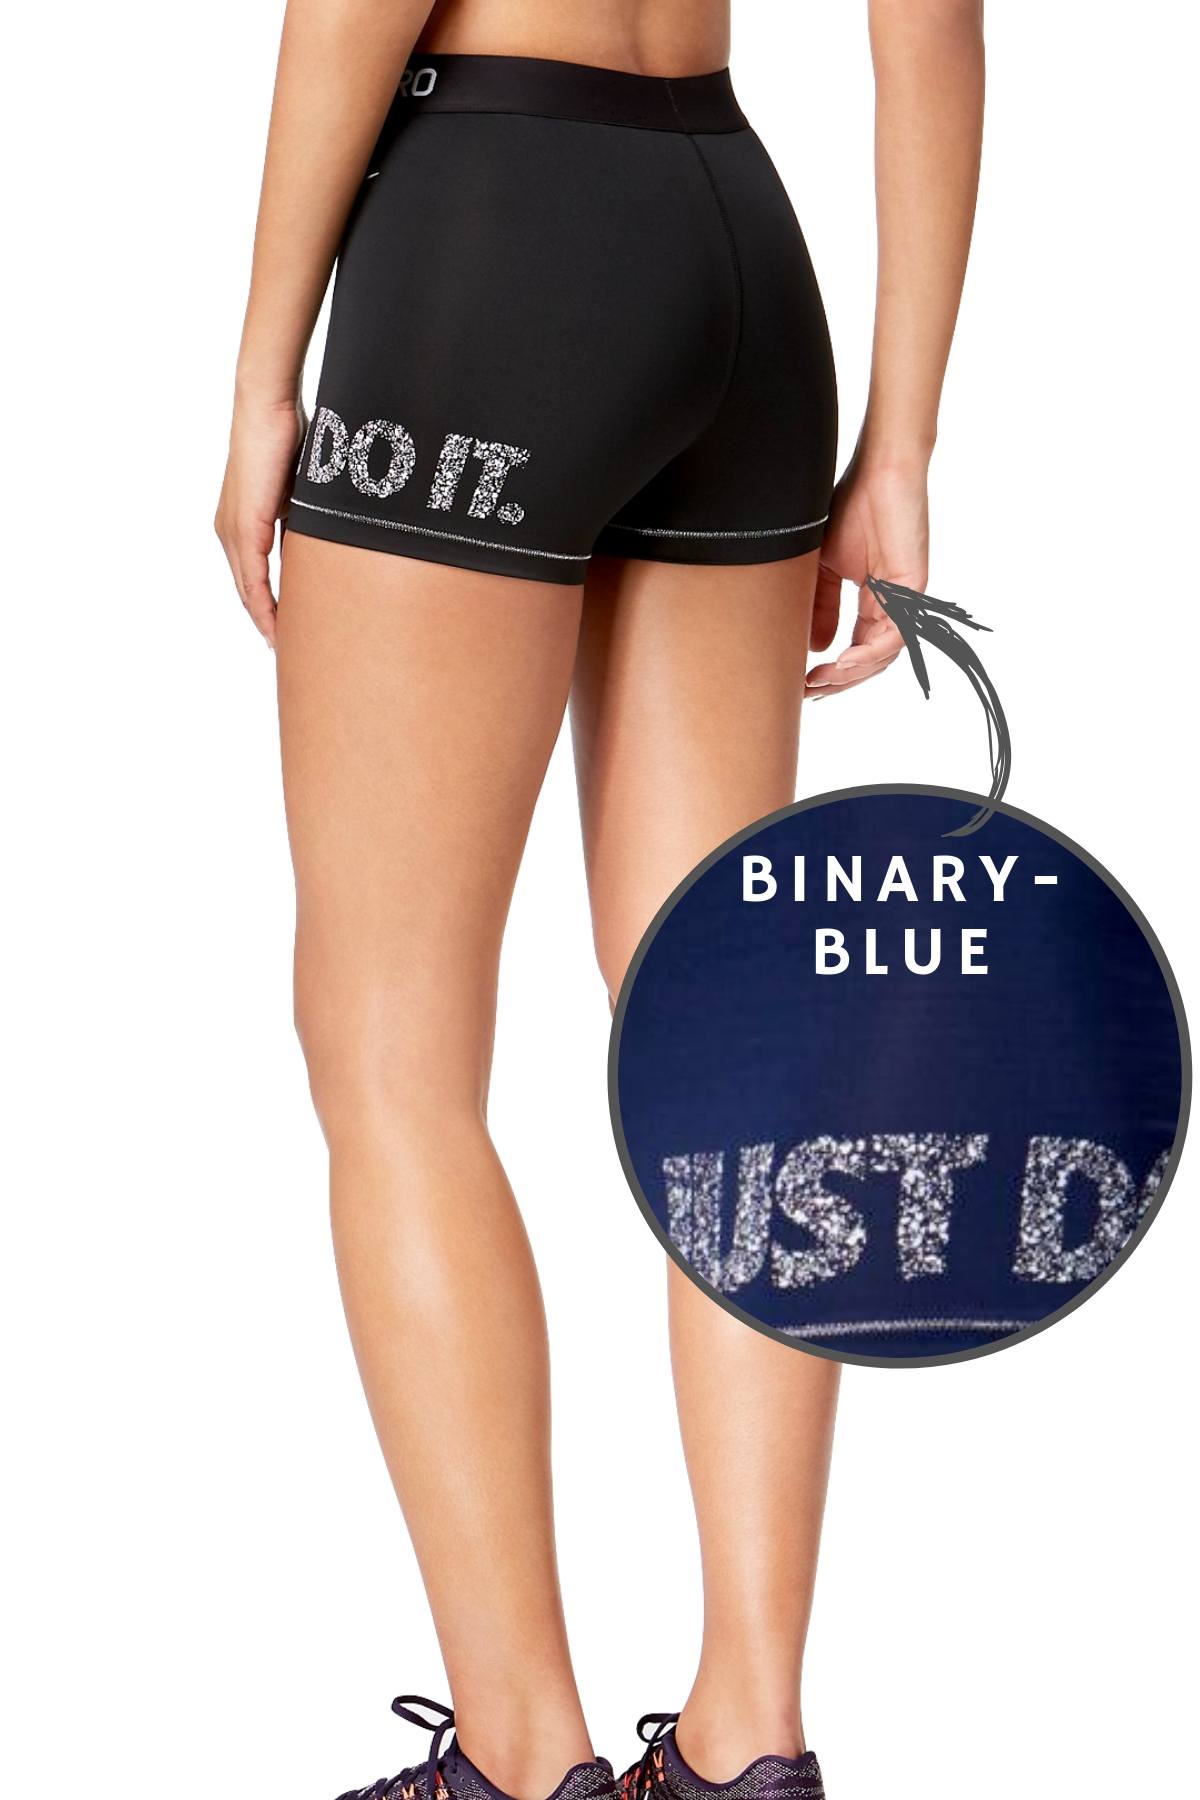 Nike Binary-Blue Pro Dri-fit Short